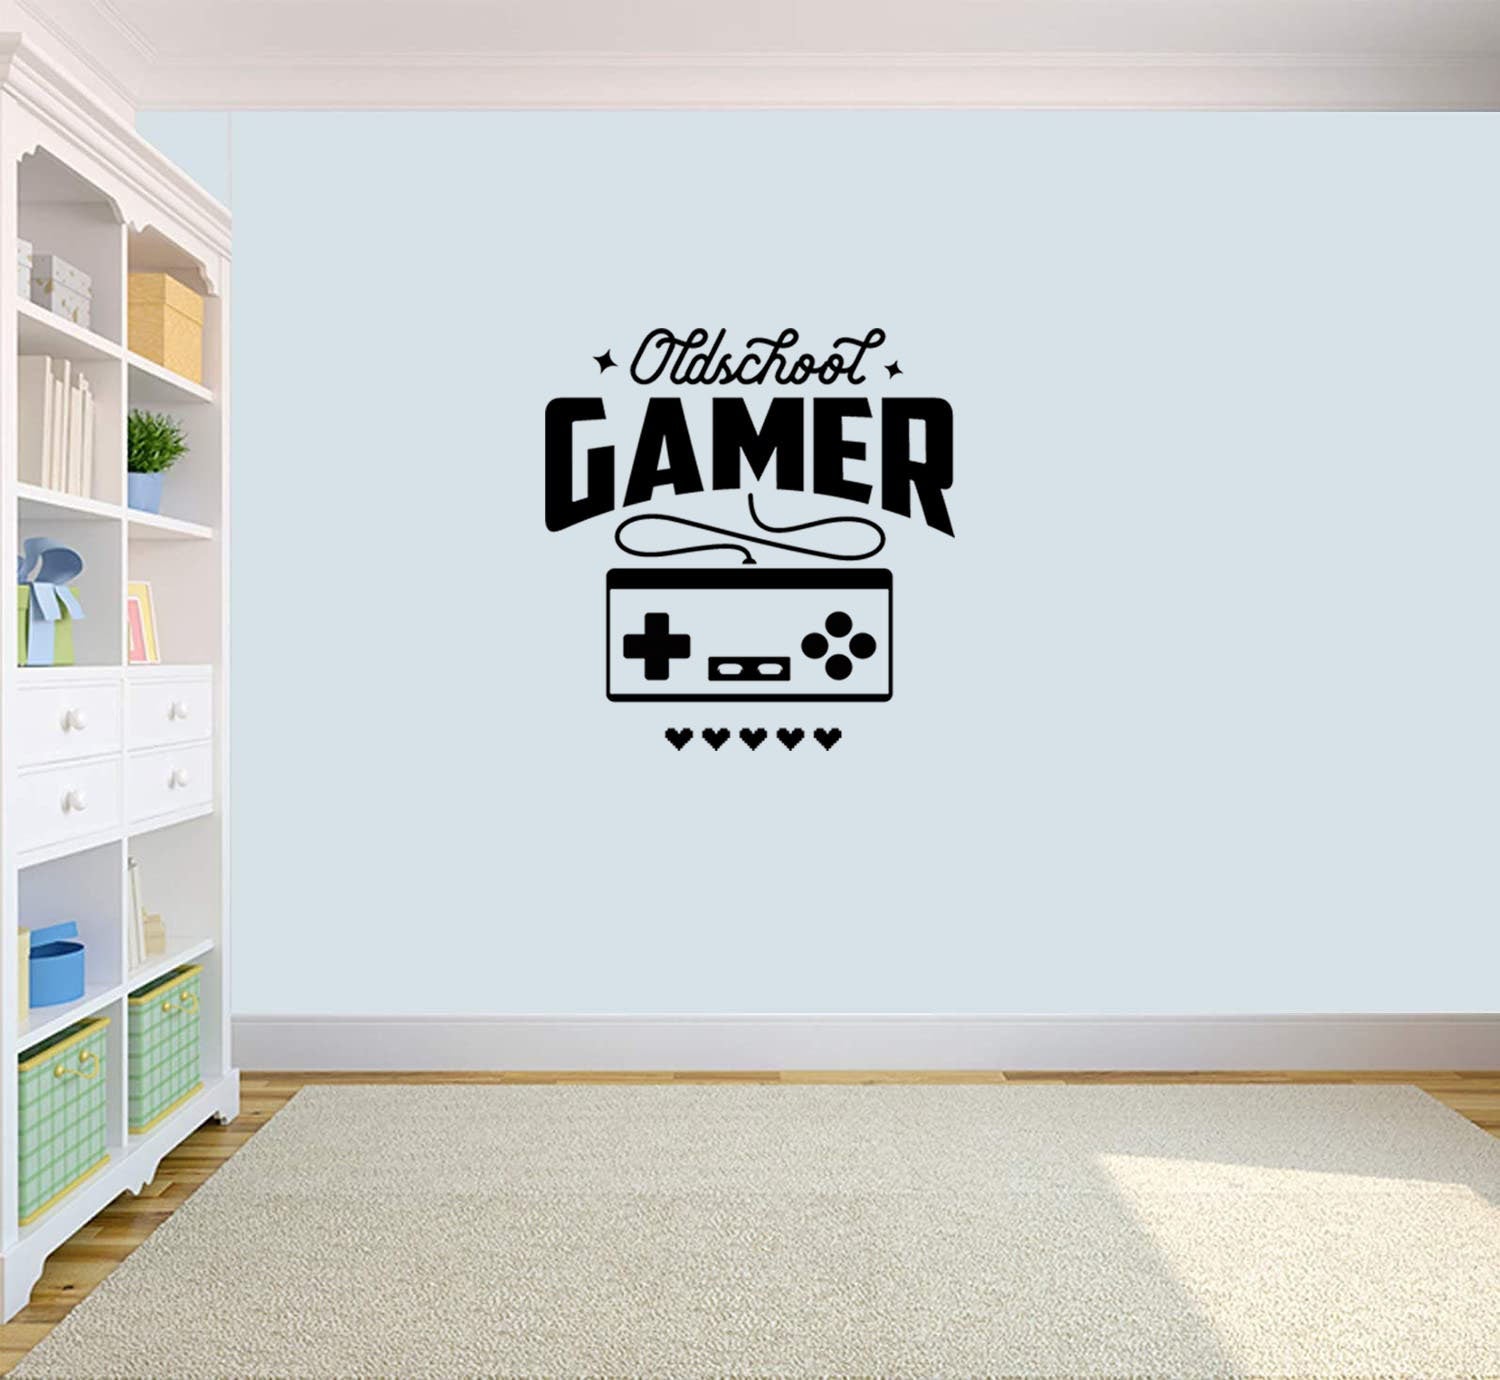 Gamer wall sticker